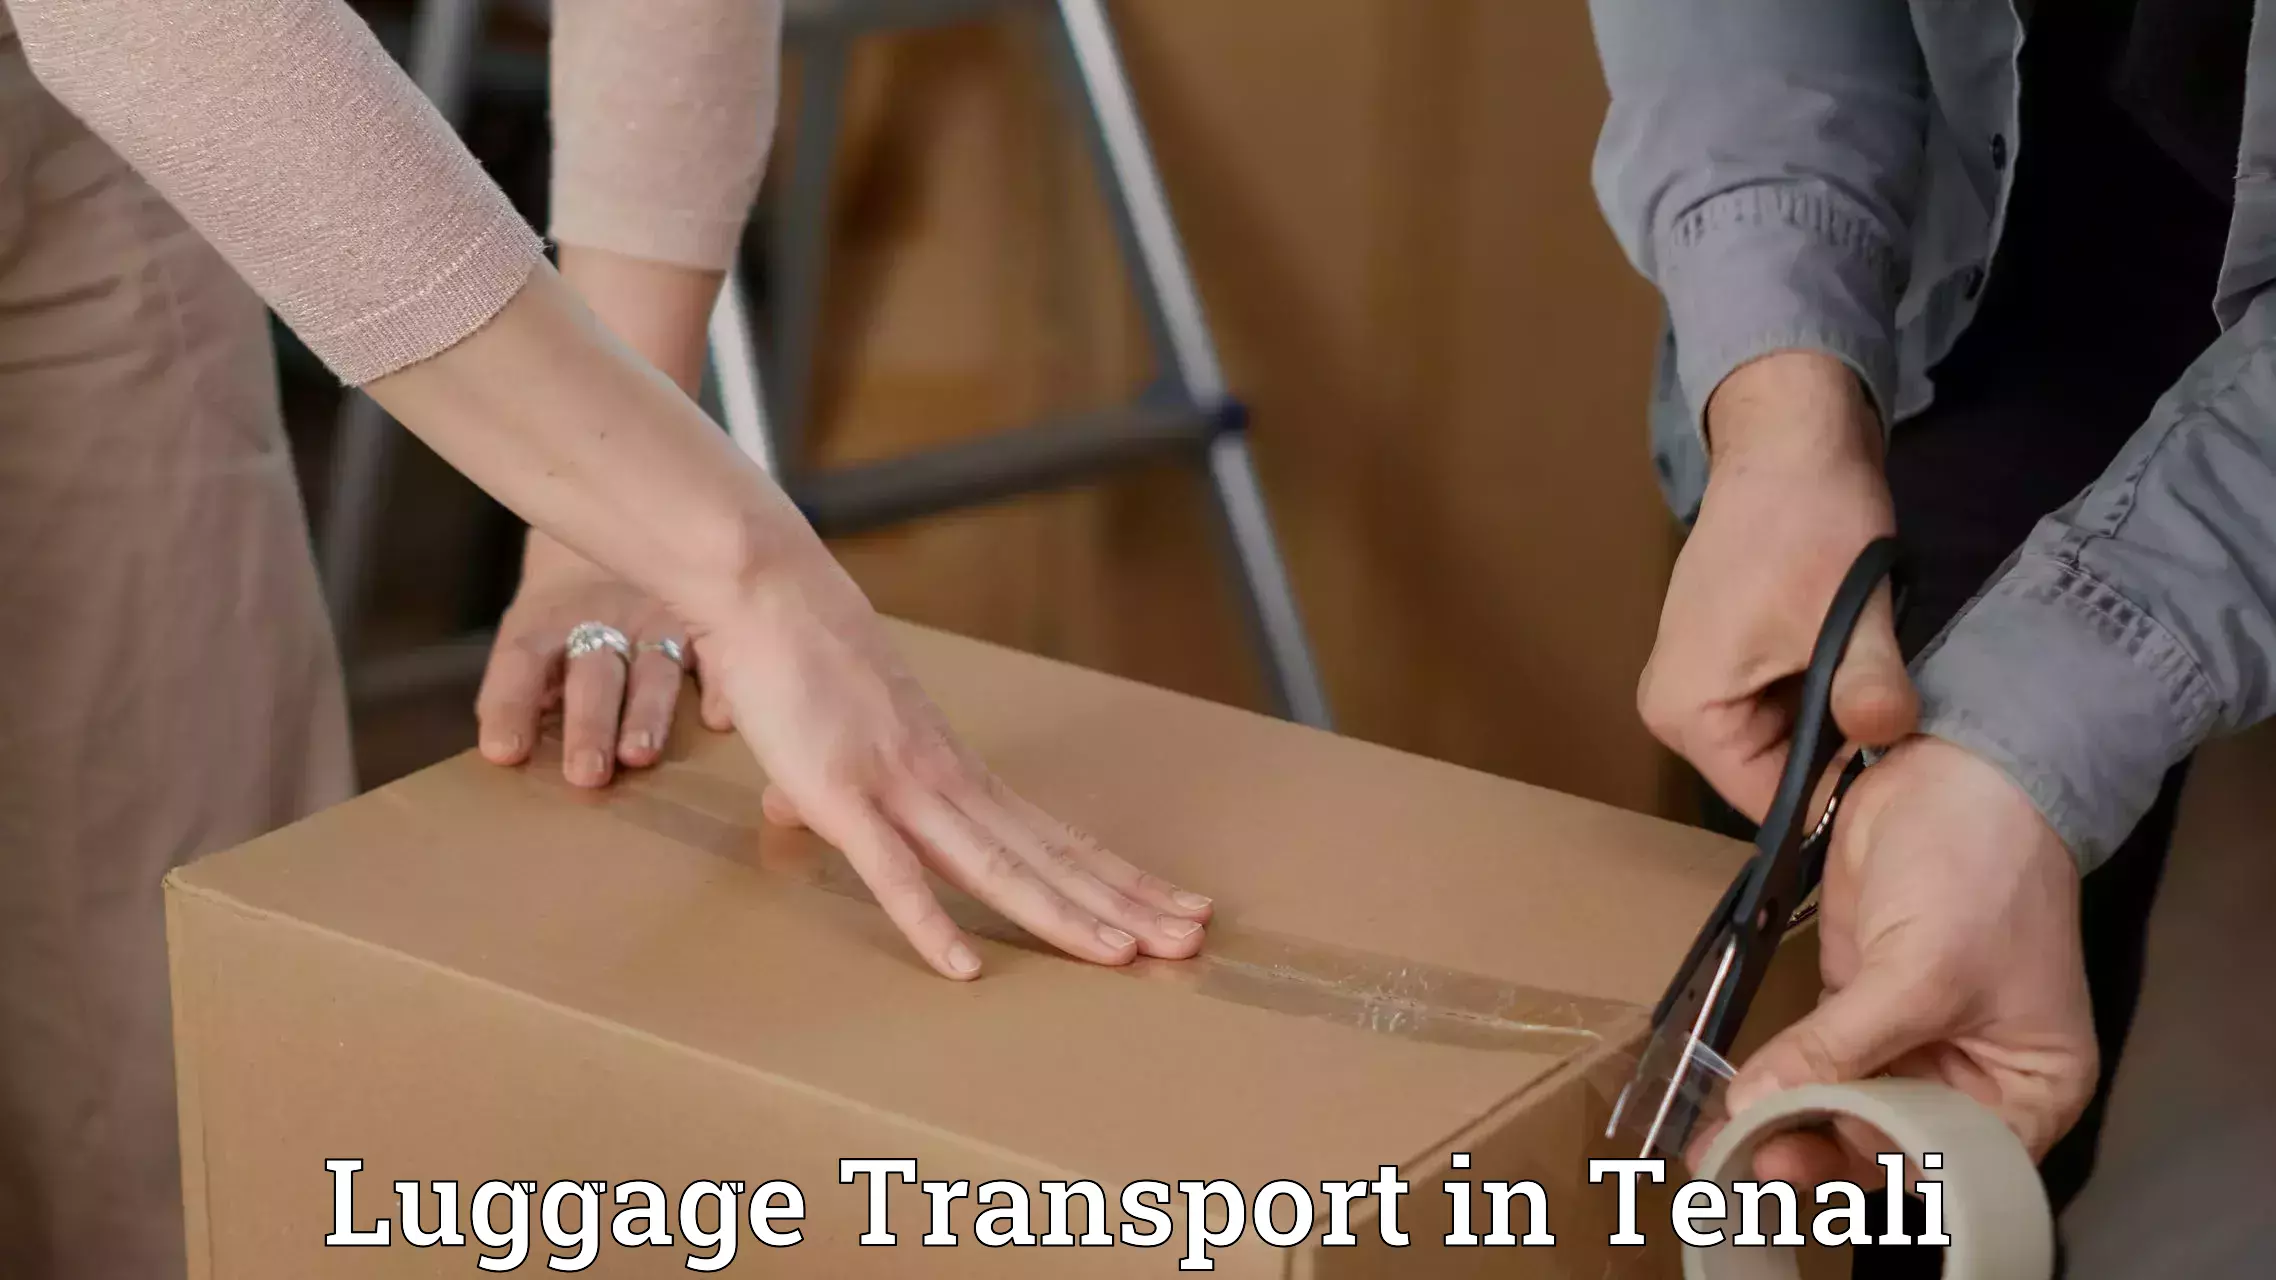 Luggage transport deals in Tenali